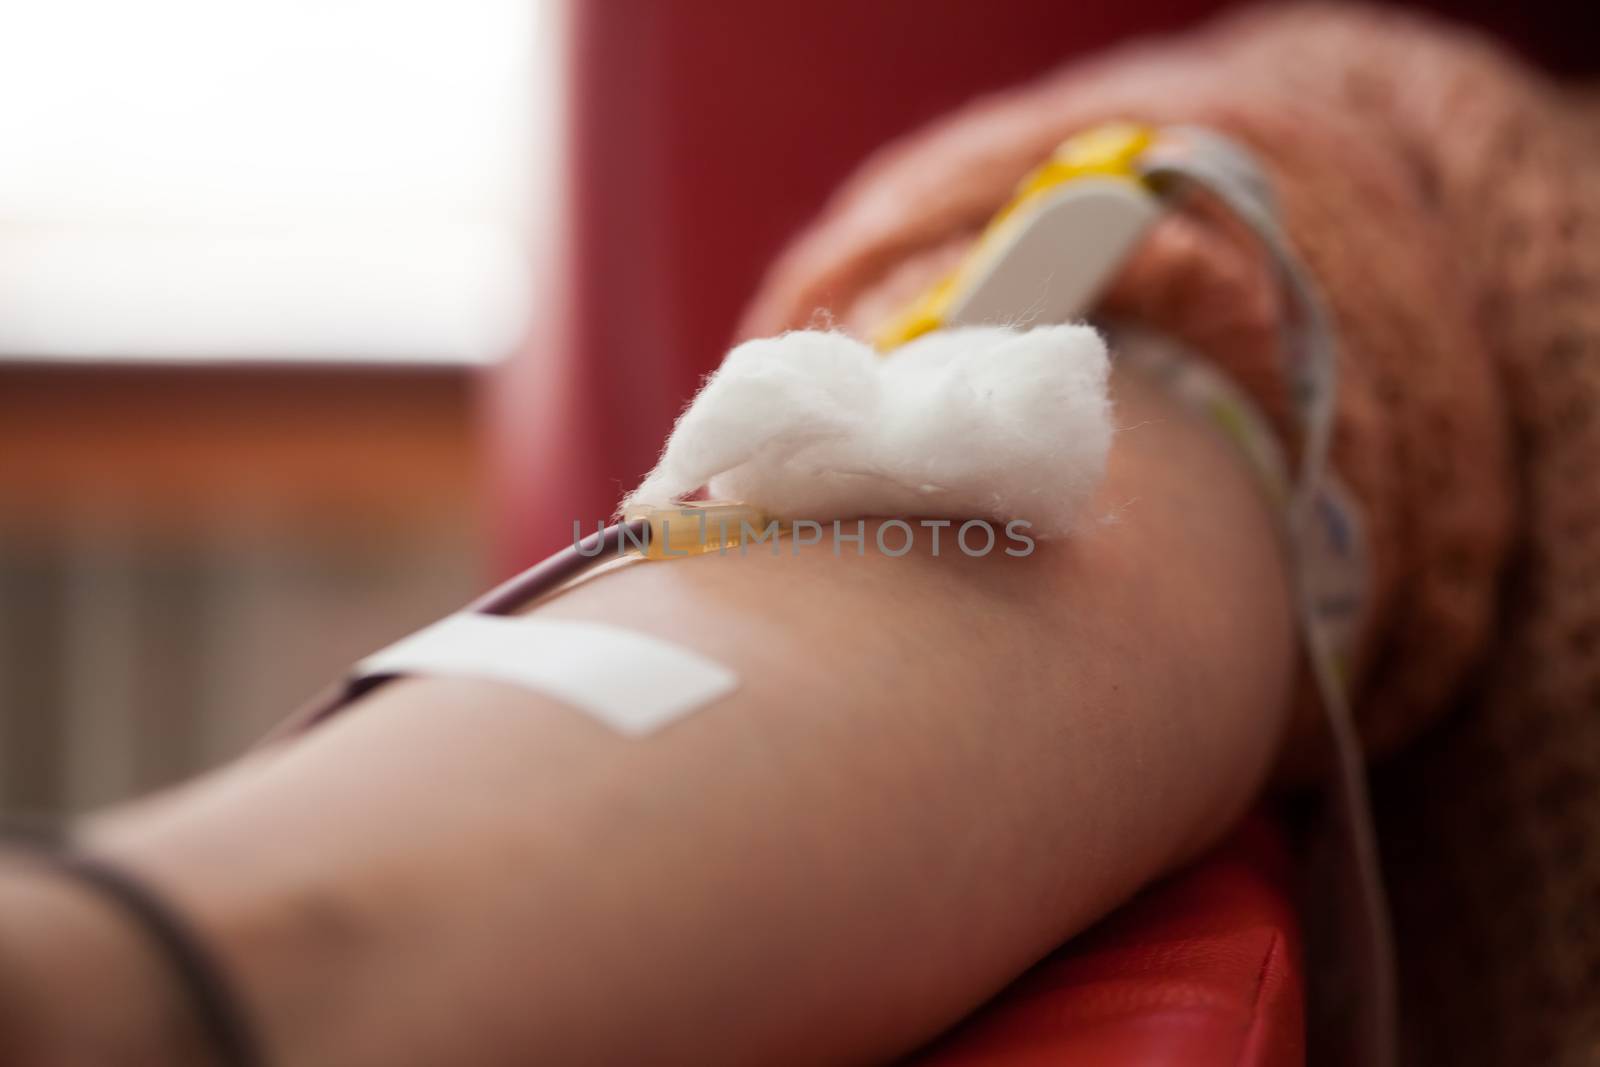 Blood transfusion closeup of arm by Plyushkin